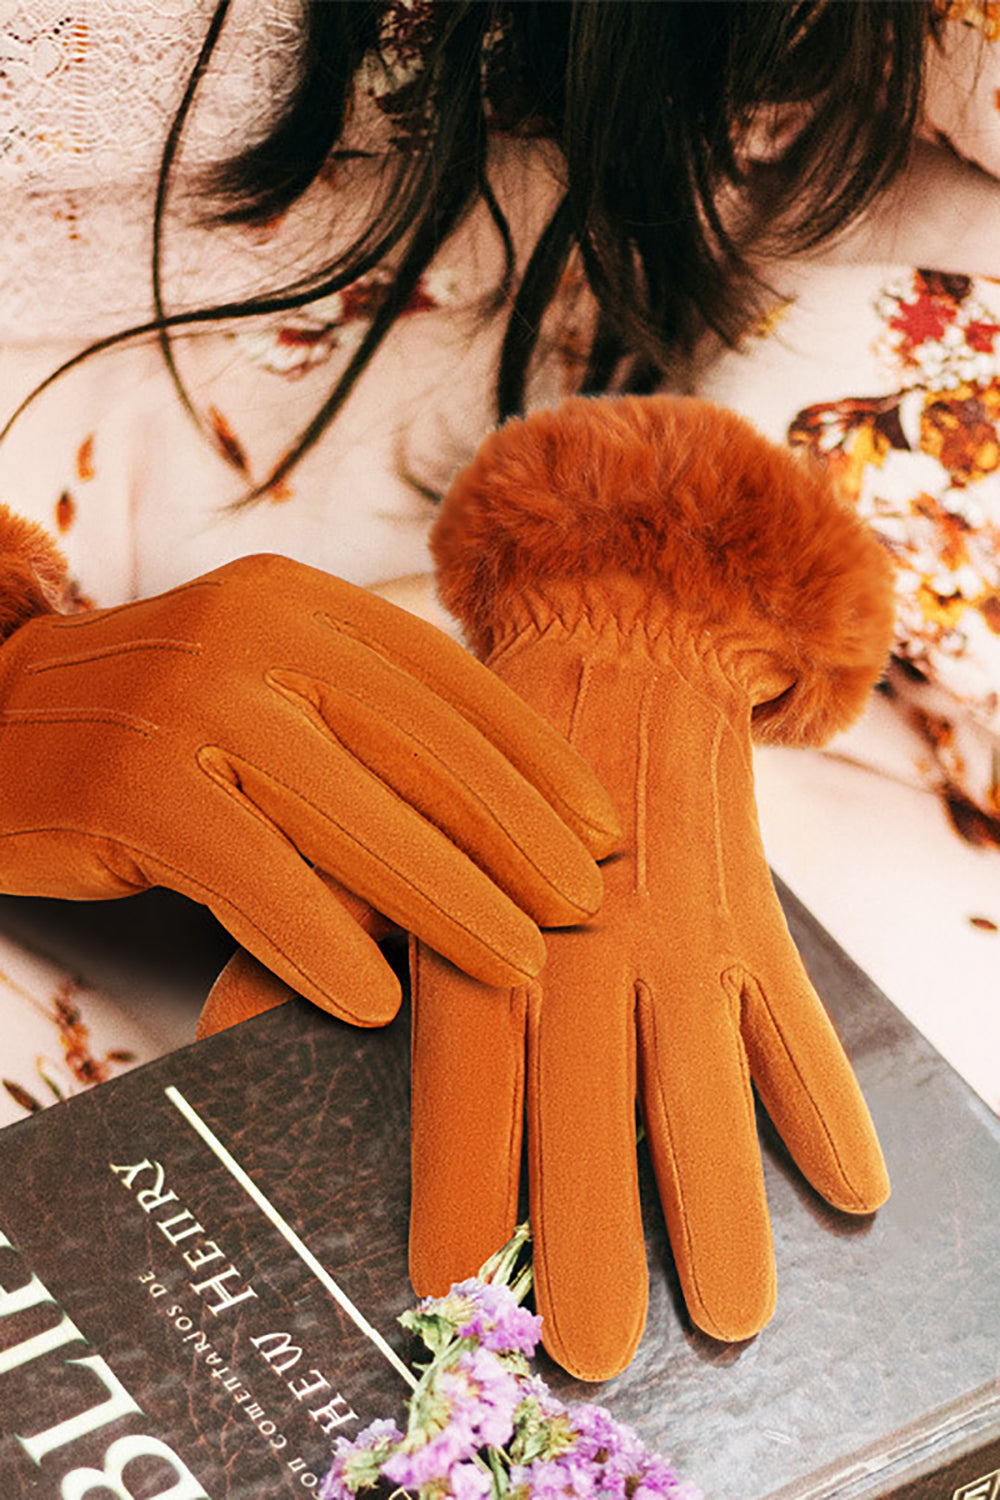 Black Leather Gloves For Women